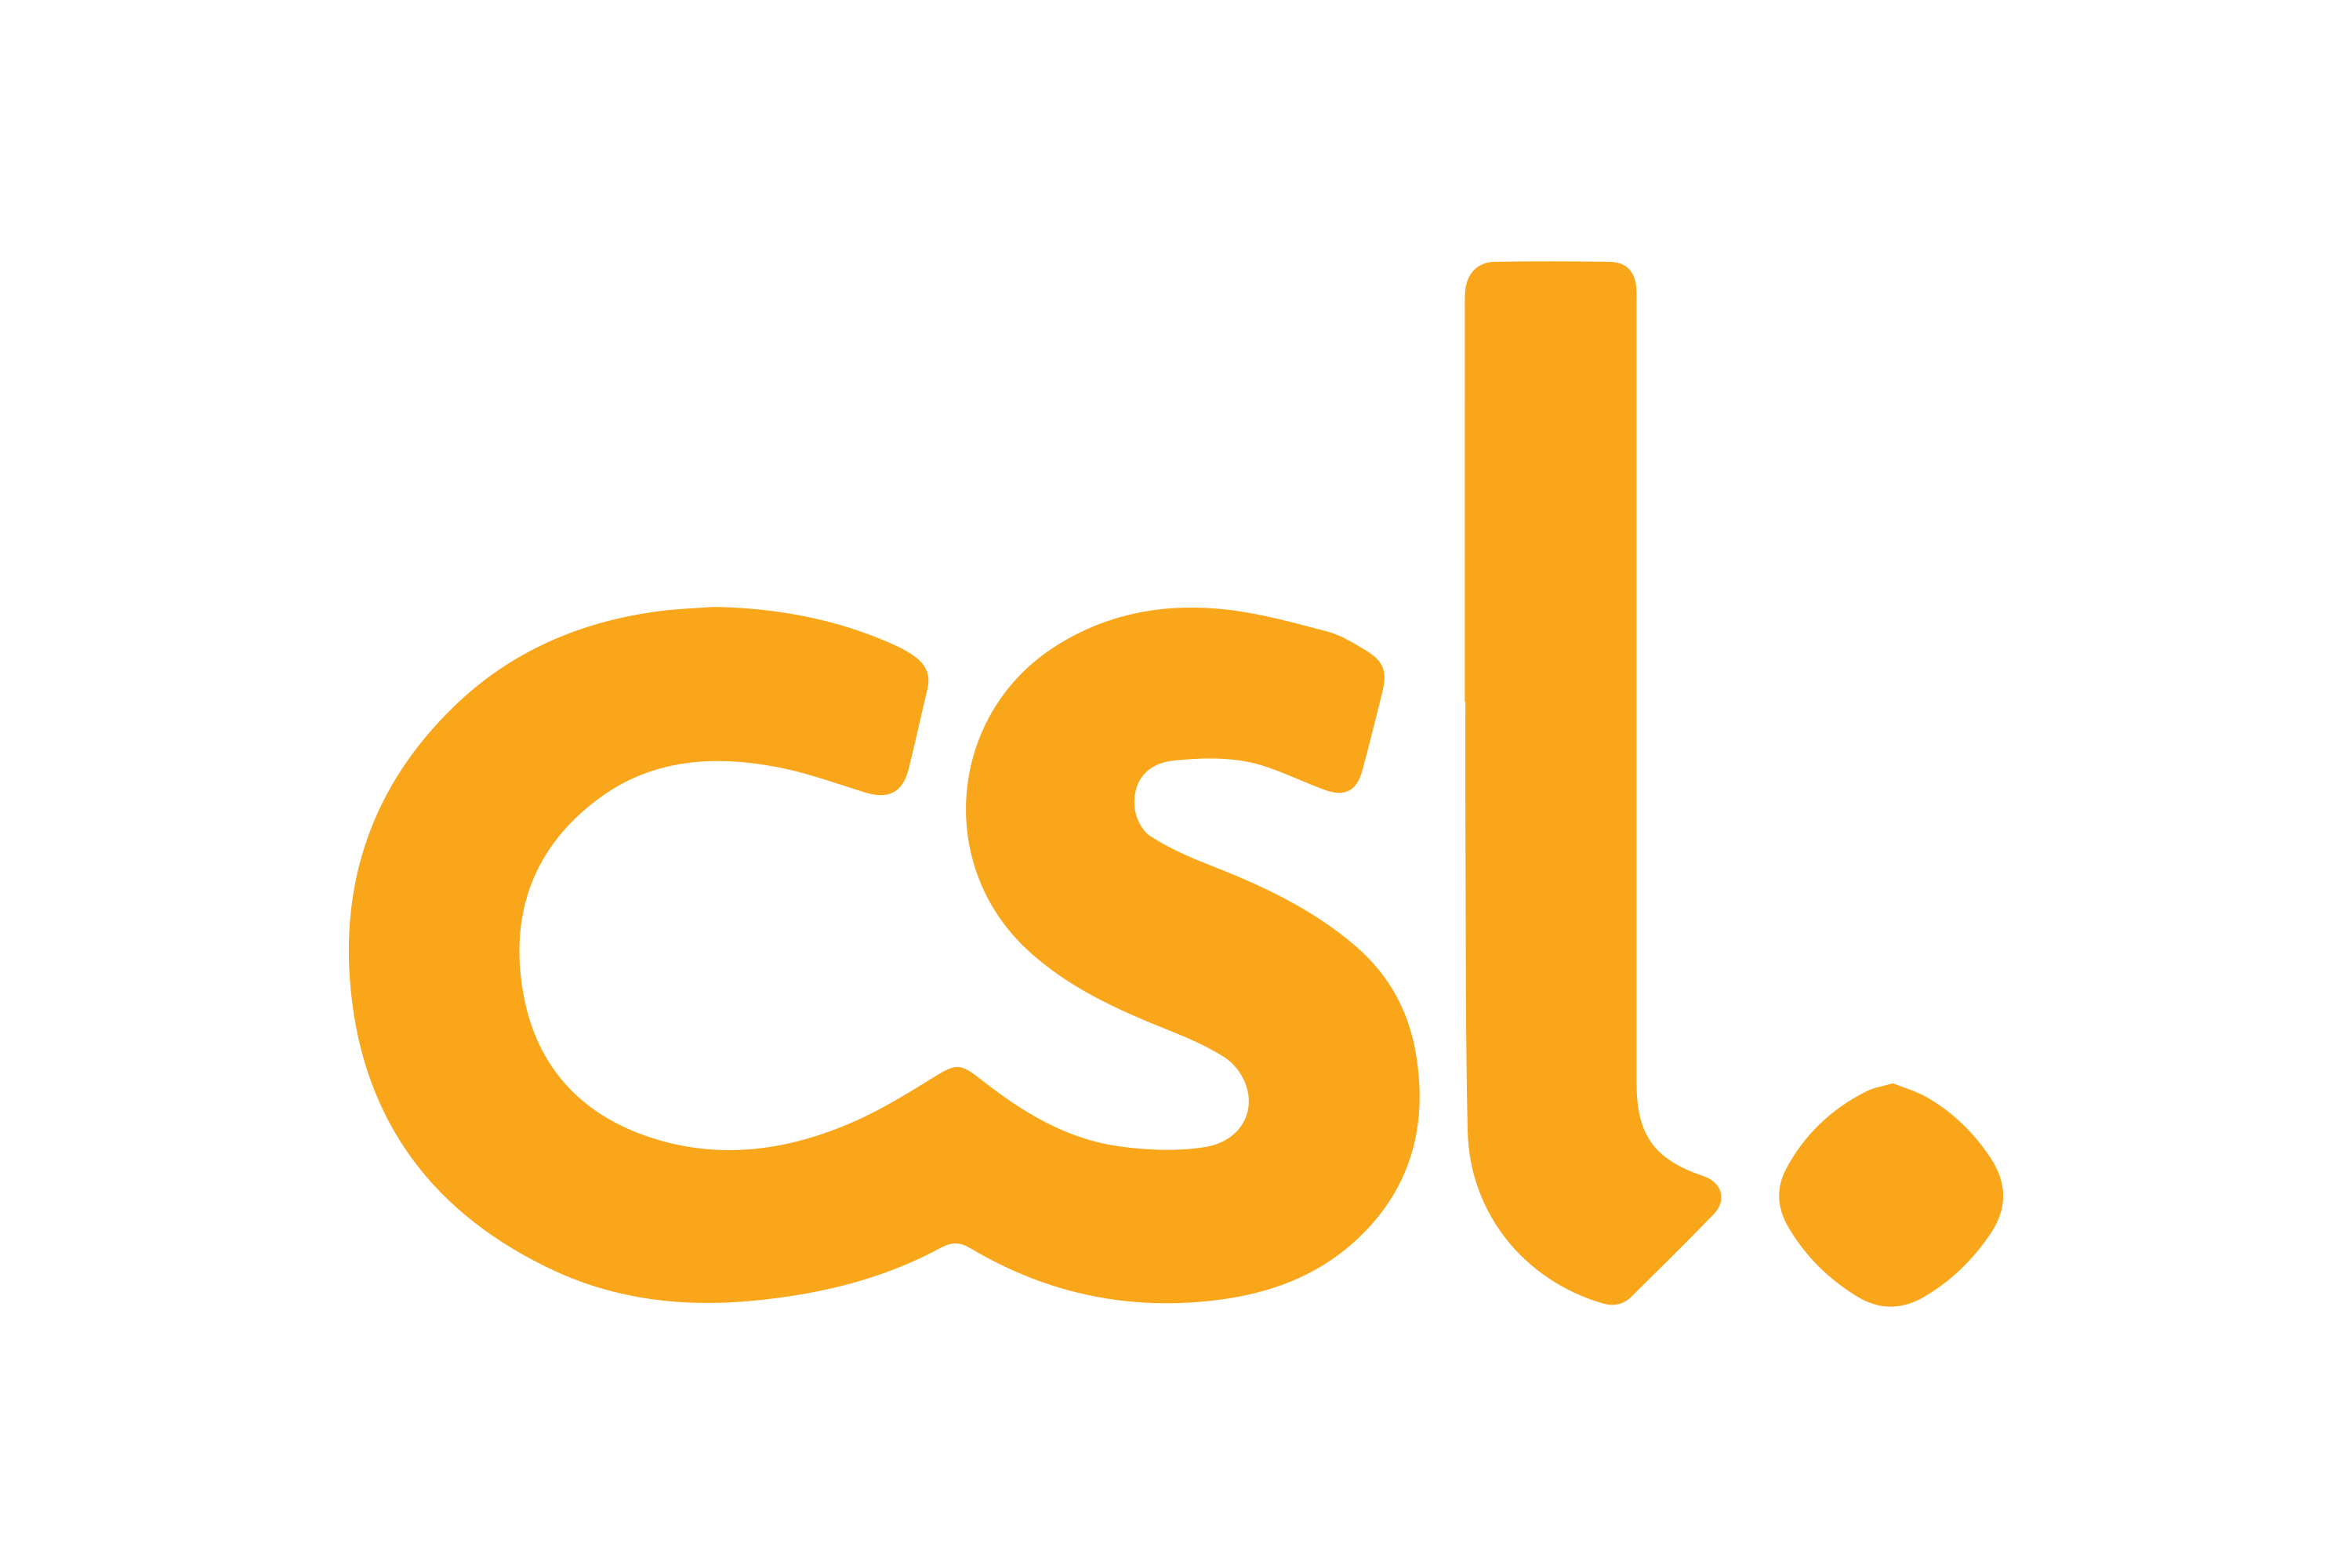 Download Csl Mobile Limited Logo In Svg Vector Or Png File Format Logo Wine